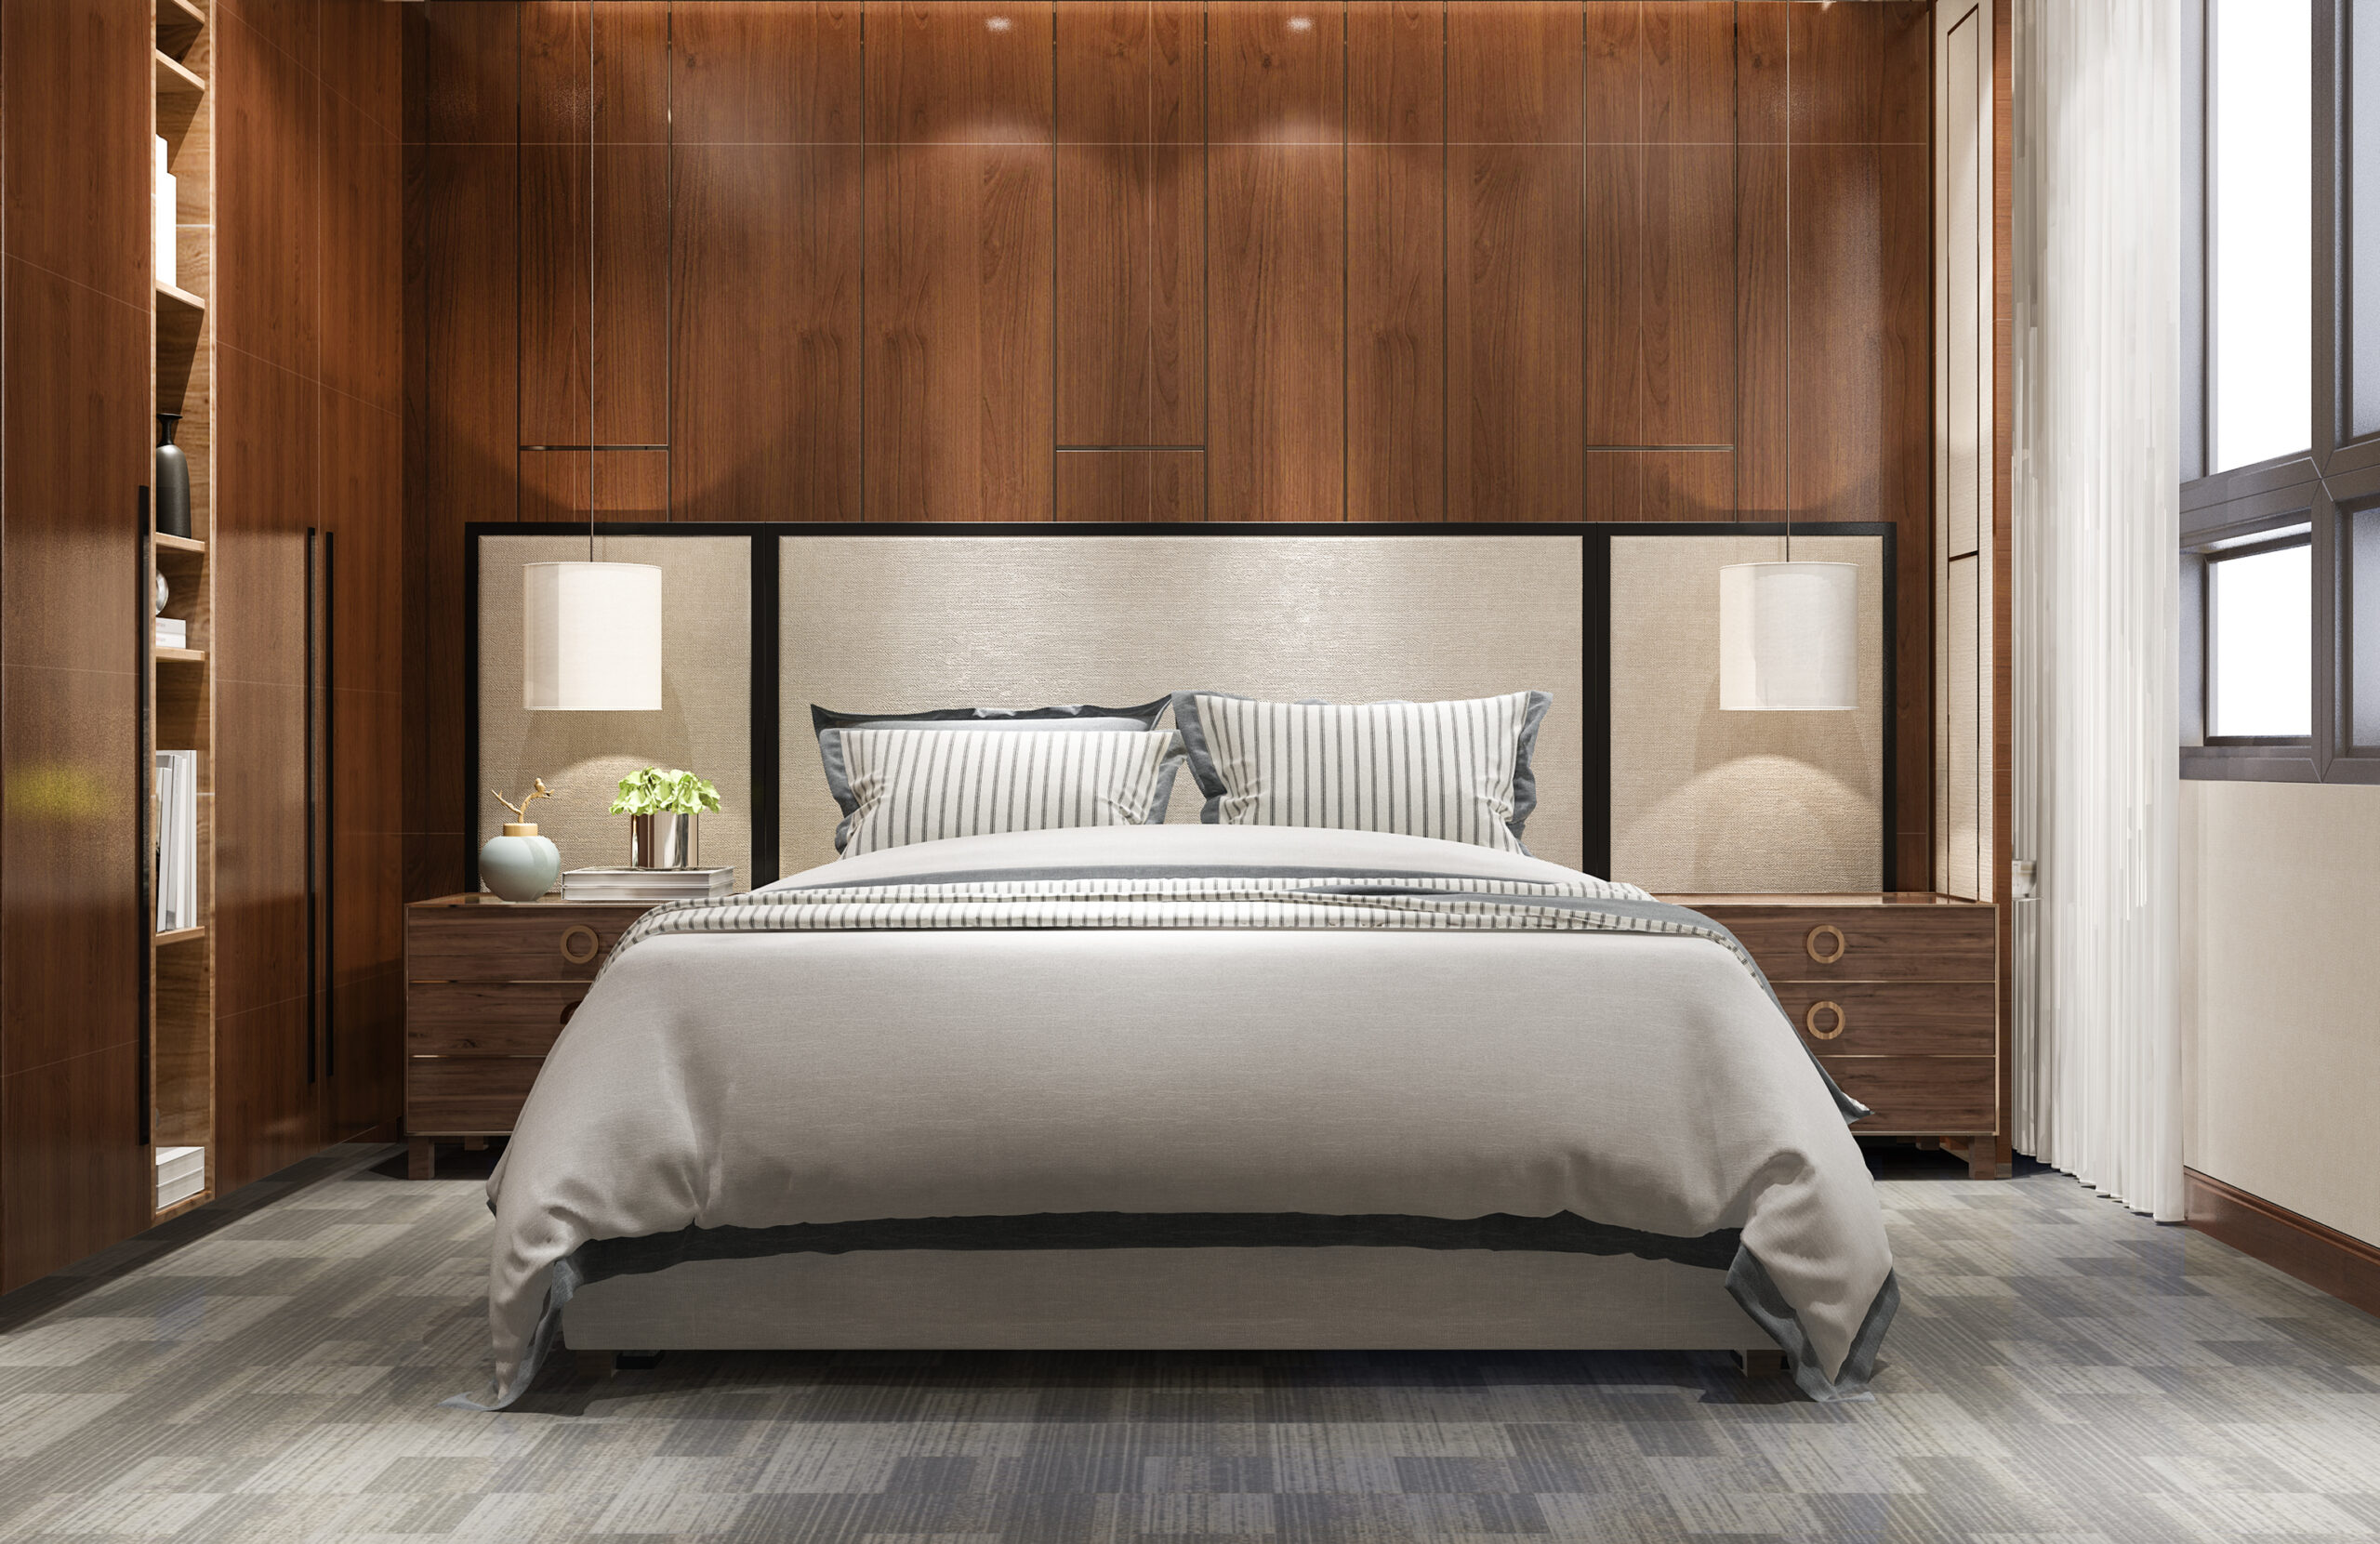 Wood Laminate Trends for Modern Interior Design